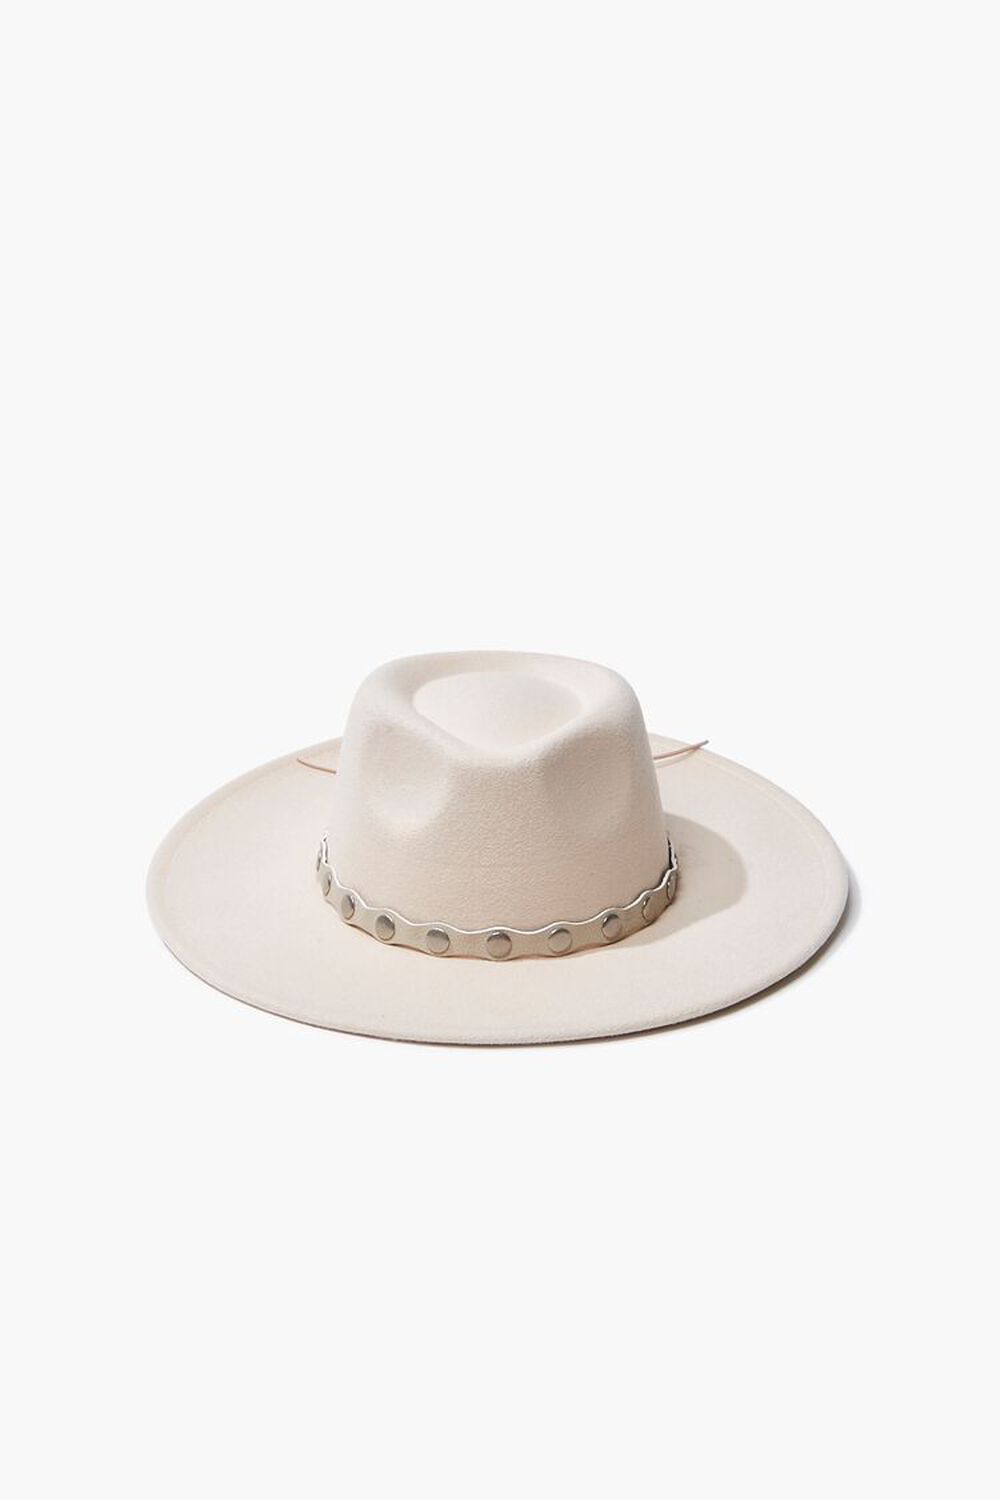 CREAM/SILVER Studded-Trim Felt Panama Hat, image 1